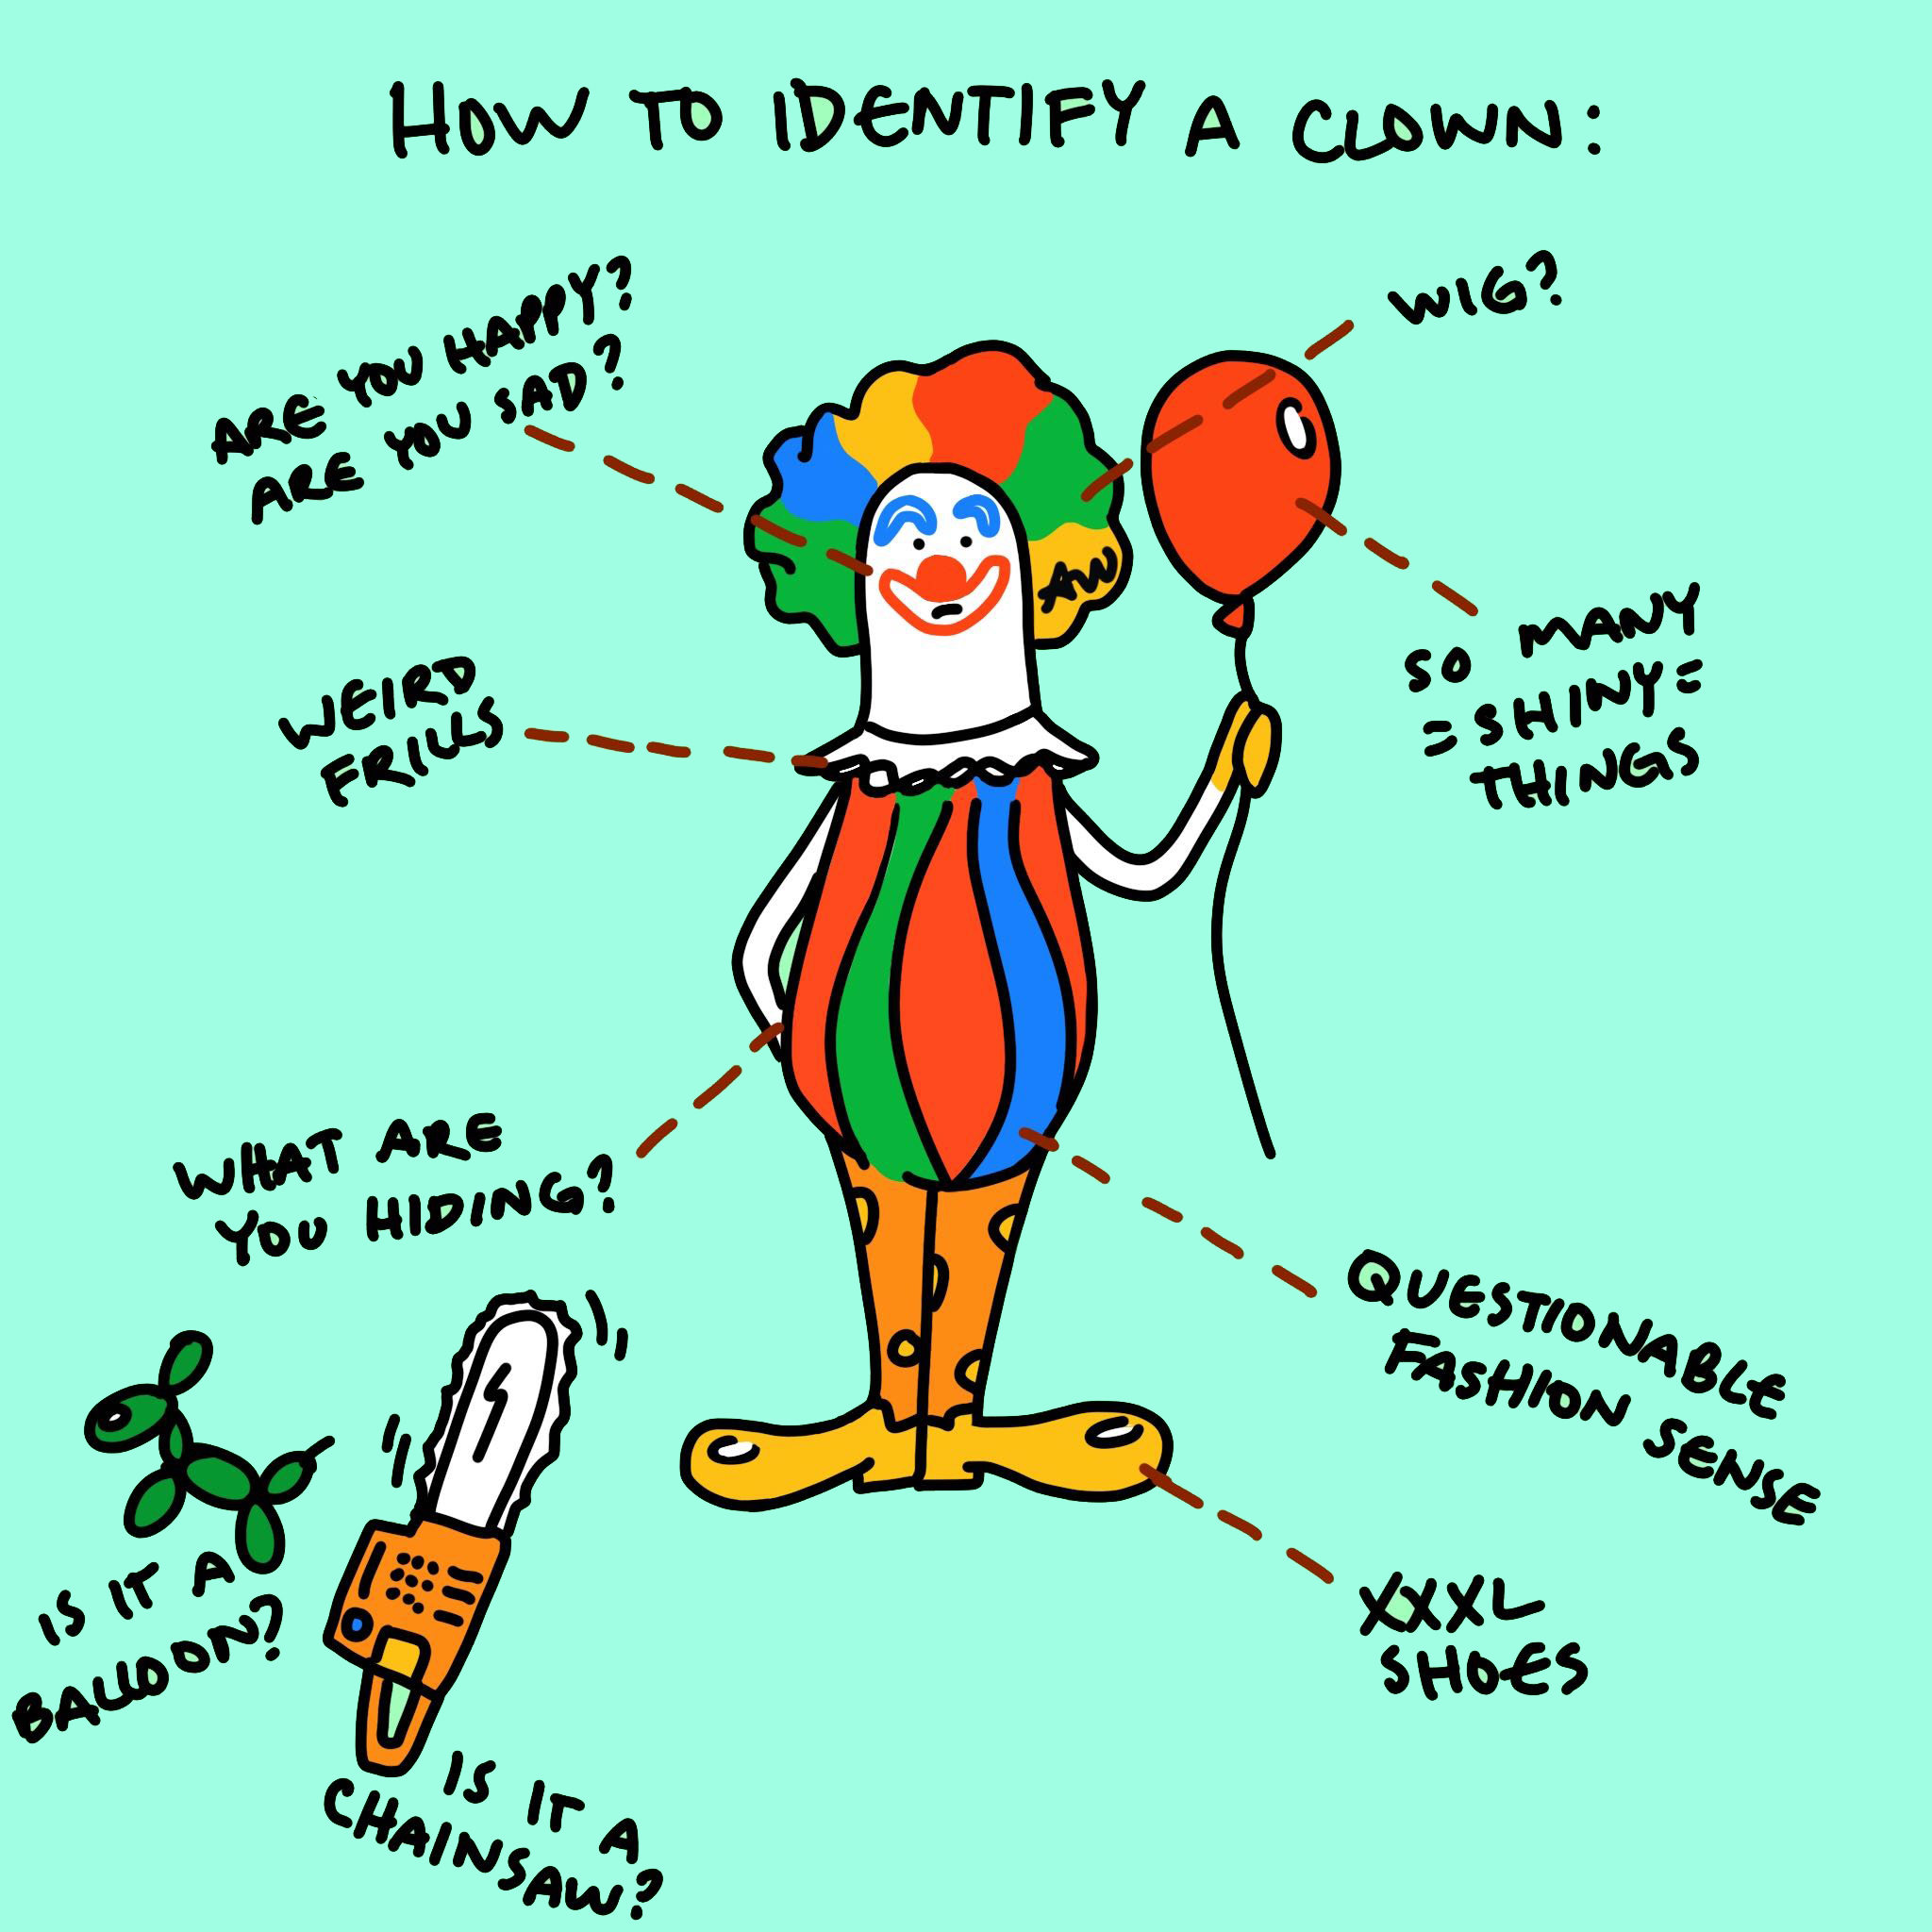 Clown Memes